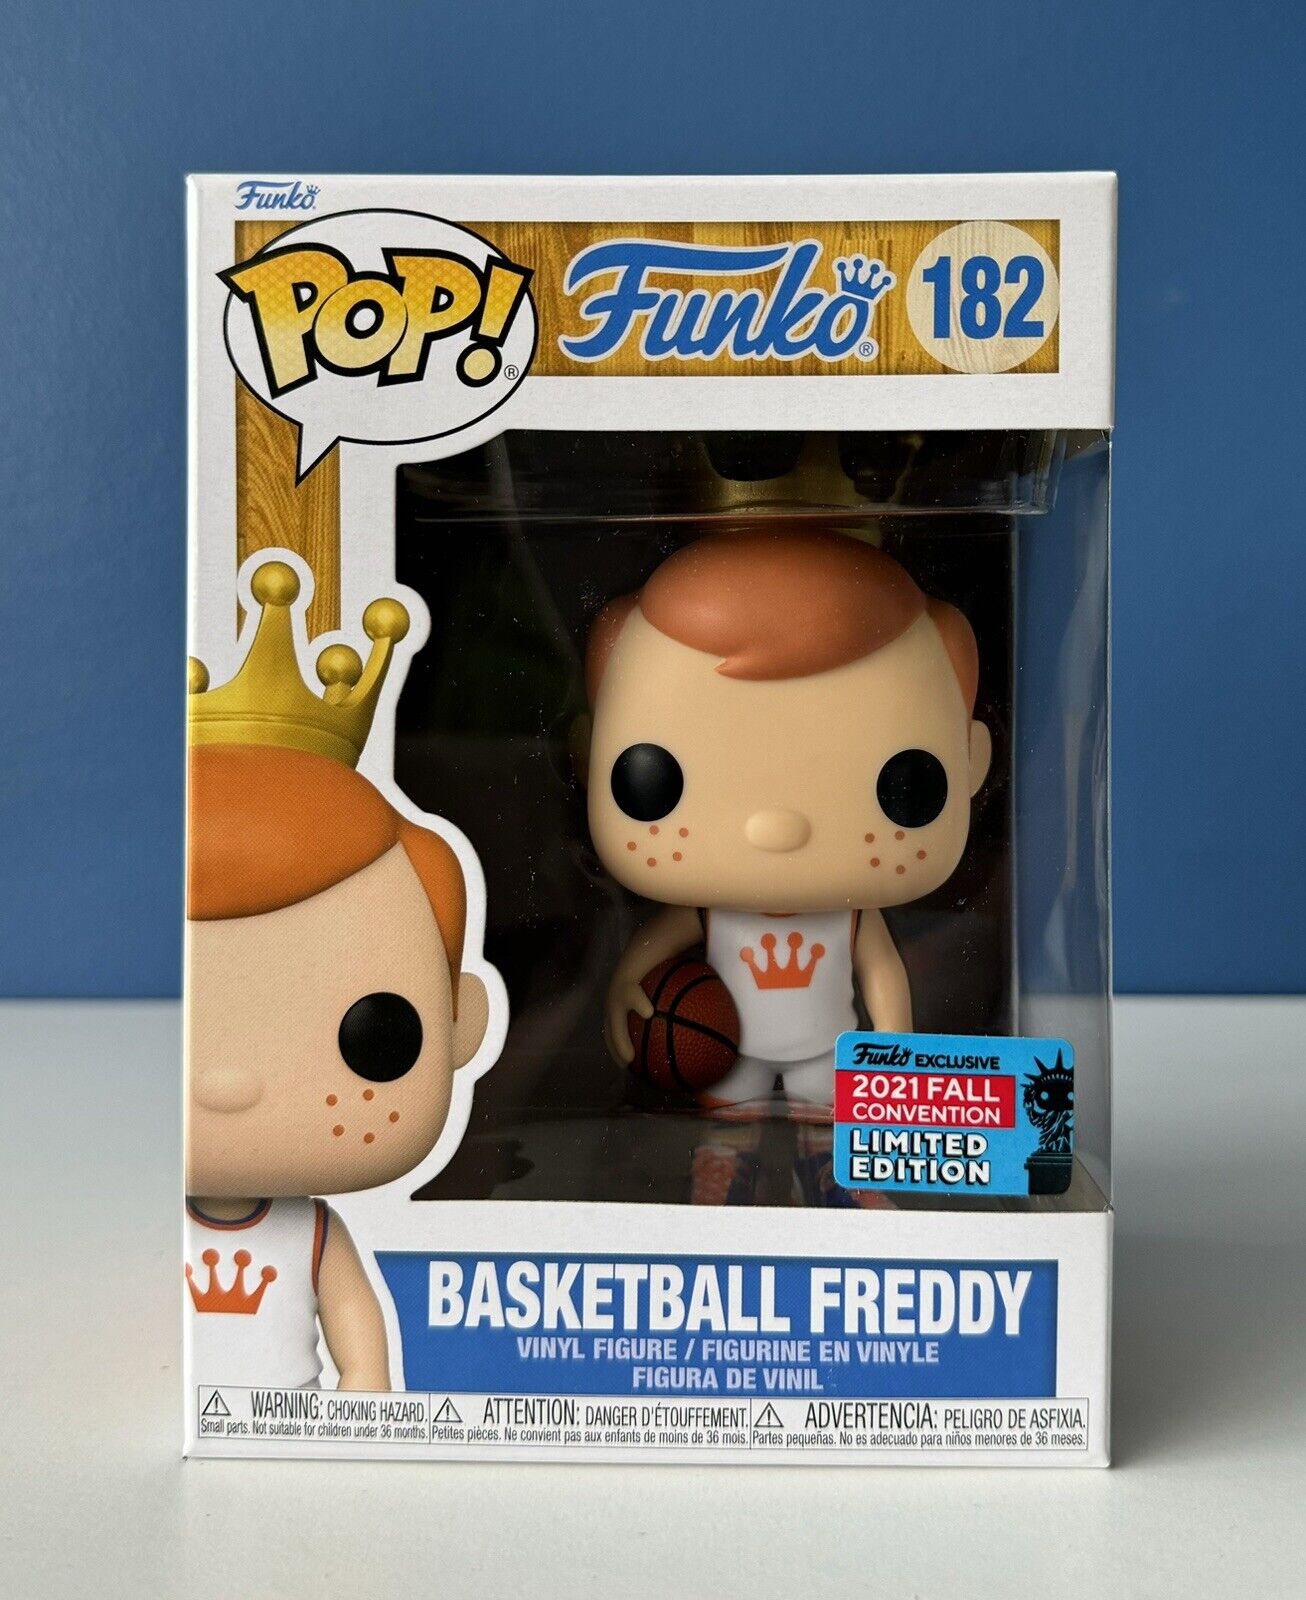 Funko Pop Freddy Funko: Basketball Freddy #182 (2021 Fall Convention Exclusive)